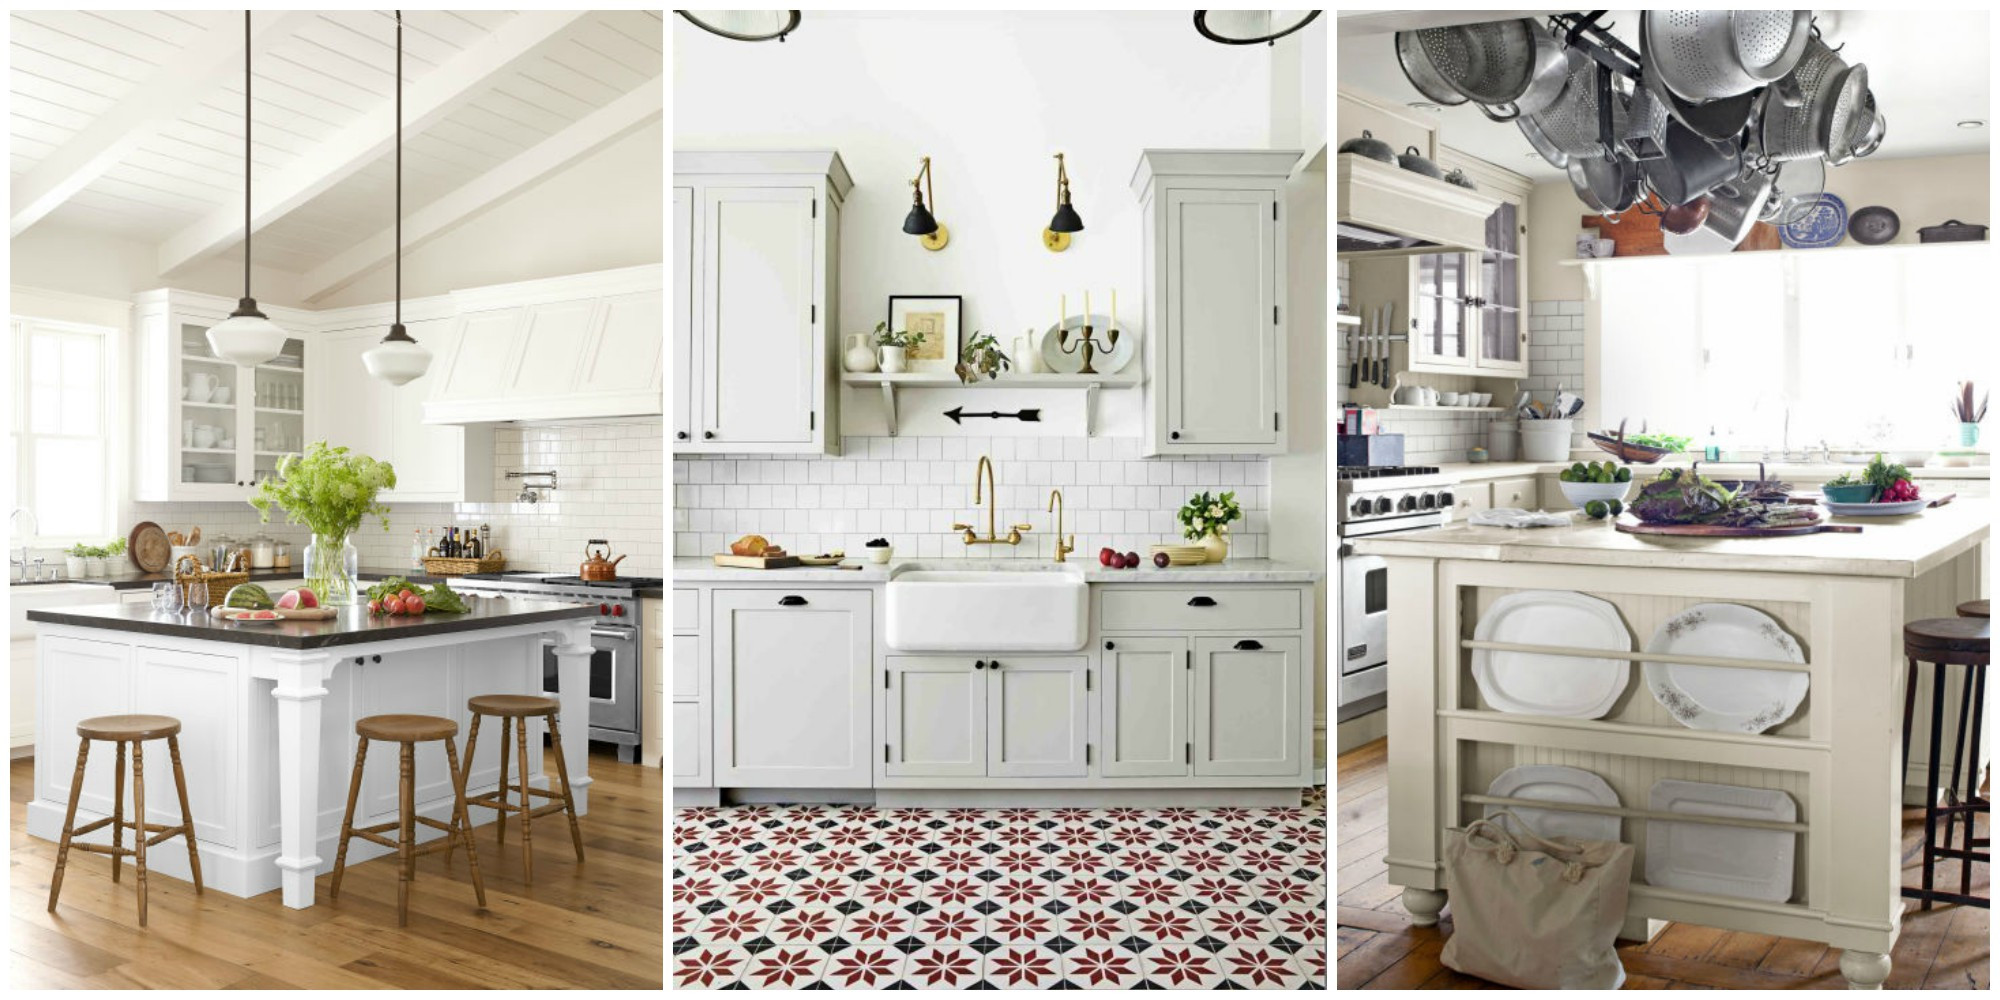 Kitchen Cabinet White Paint Colors
 10 Best White Kitchen Cabinet Paint Colors Ideas for